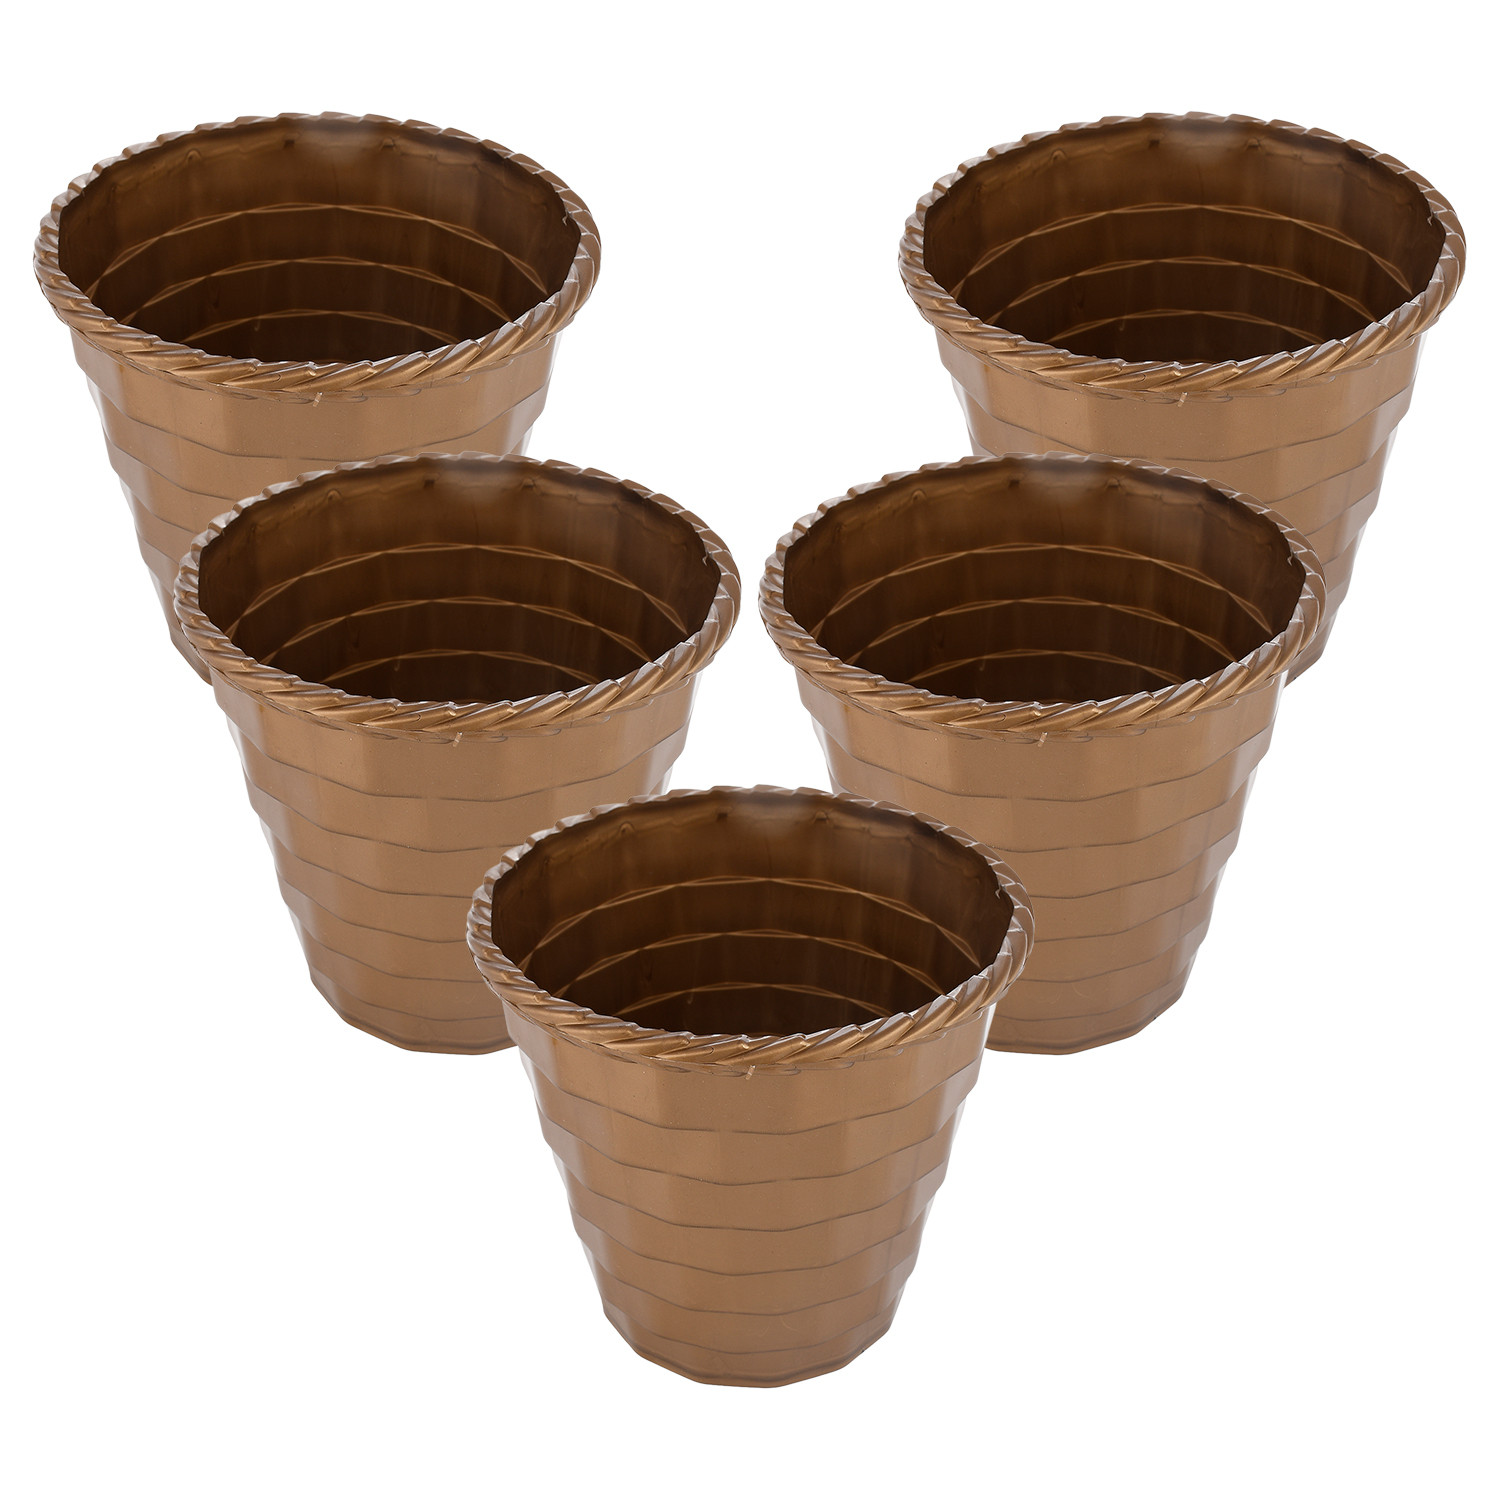 Kuber Industries Brick Flower Pot|Durable Plastic Flower Pots|Planters for Home Décor|Garden|Living Room|Balcony|8 Inch (Golden)